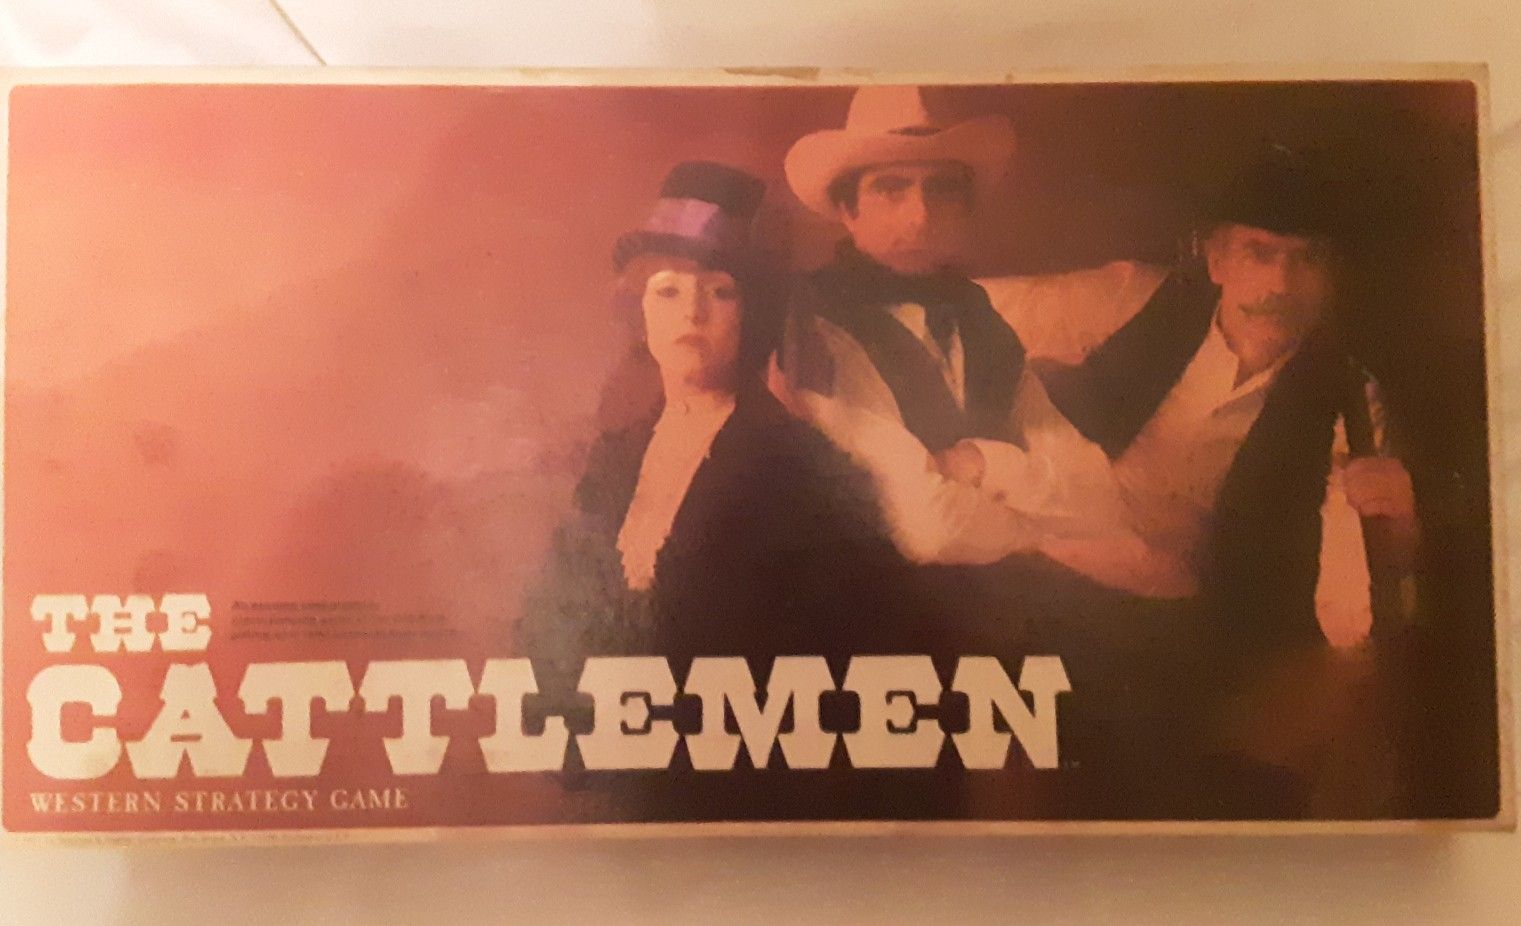 The Cattlemen board game